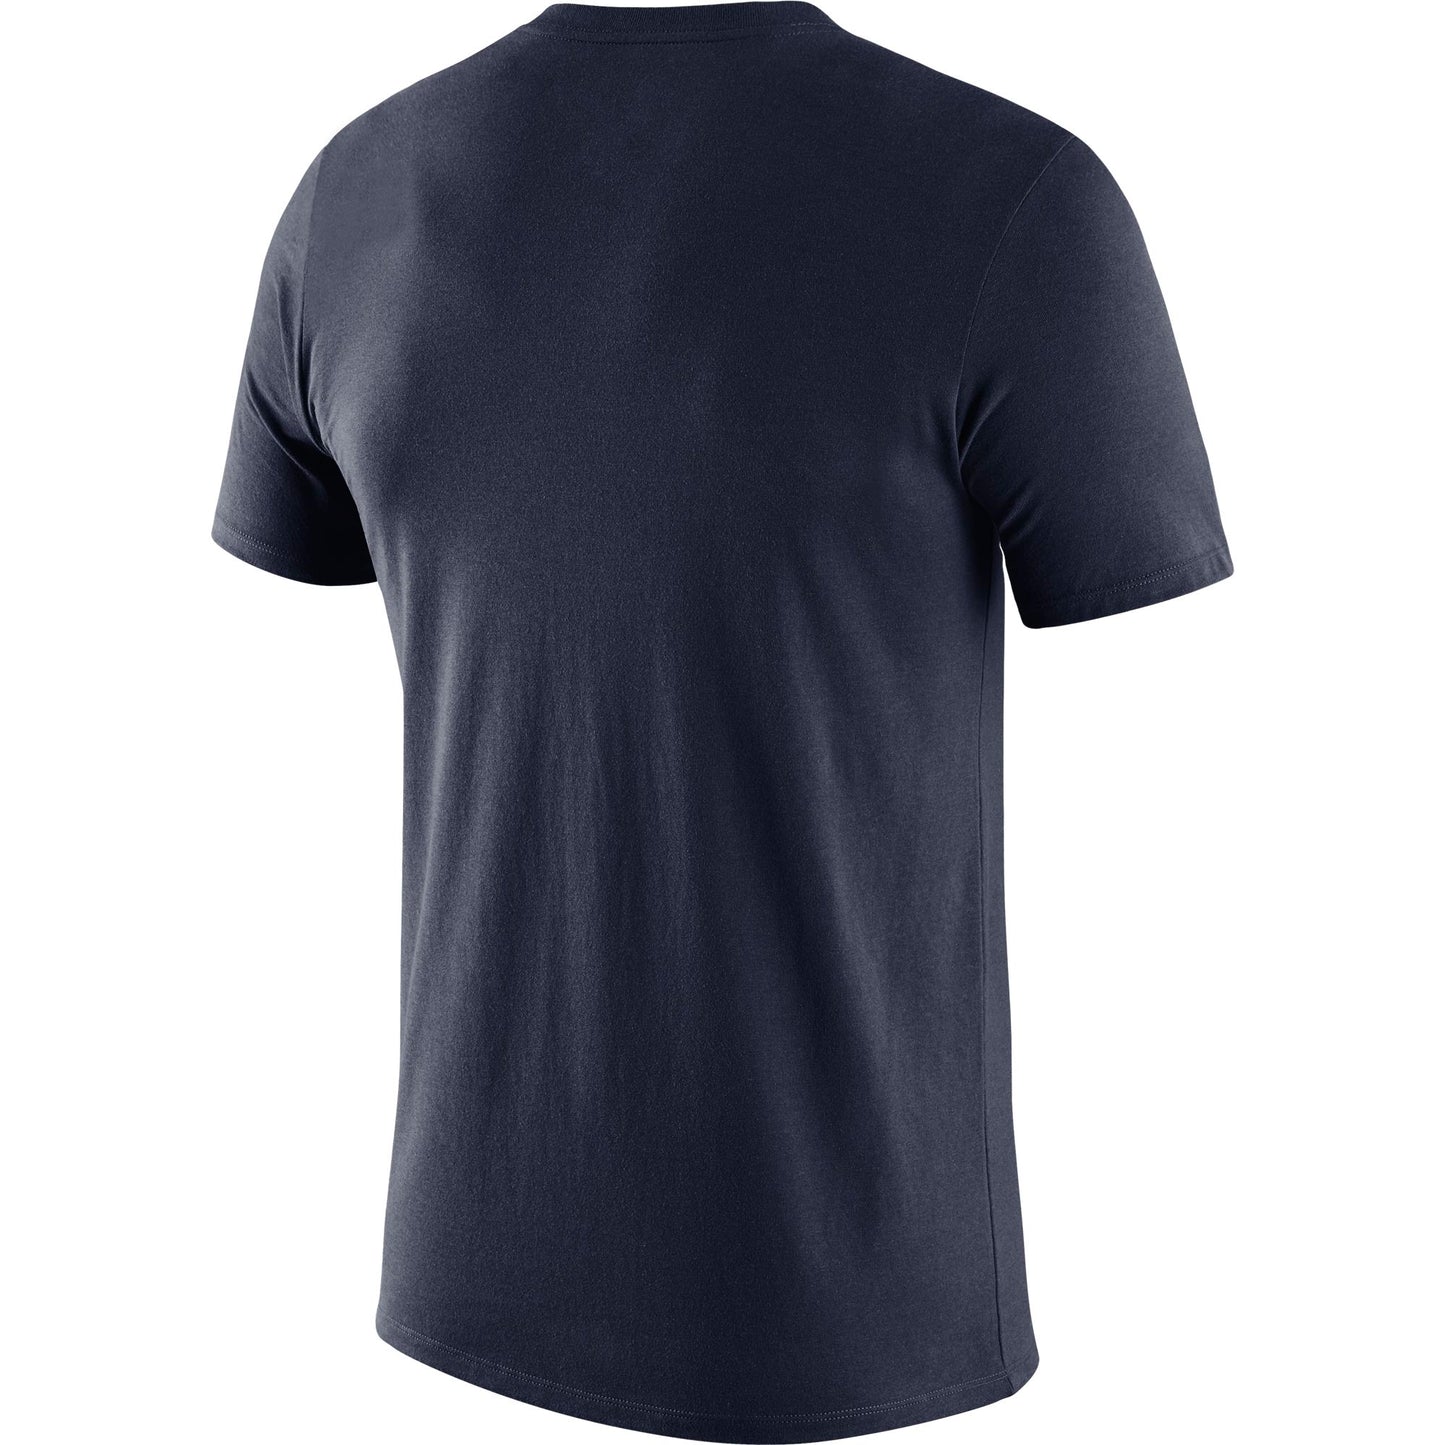 Nike Men's Arizona Wildcats Essential Logo Navy T-Shirt